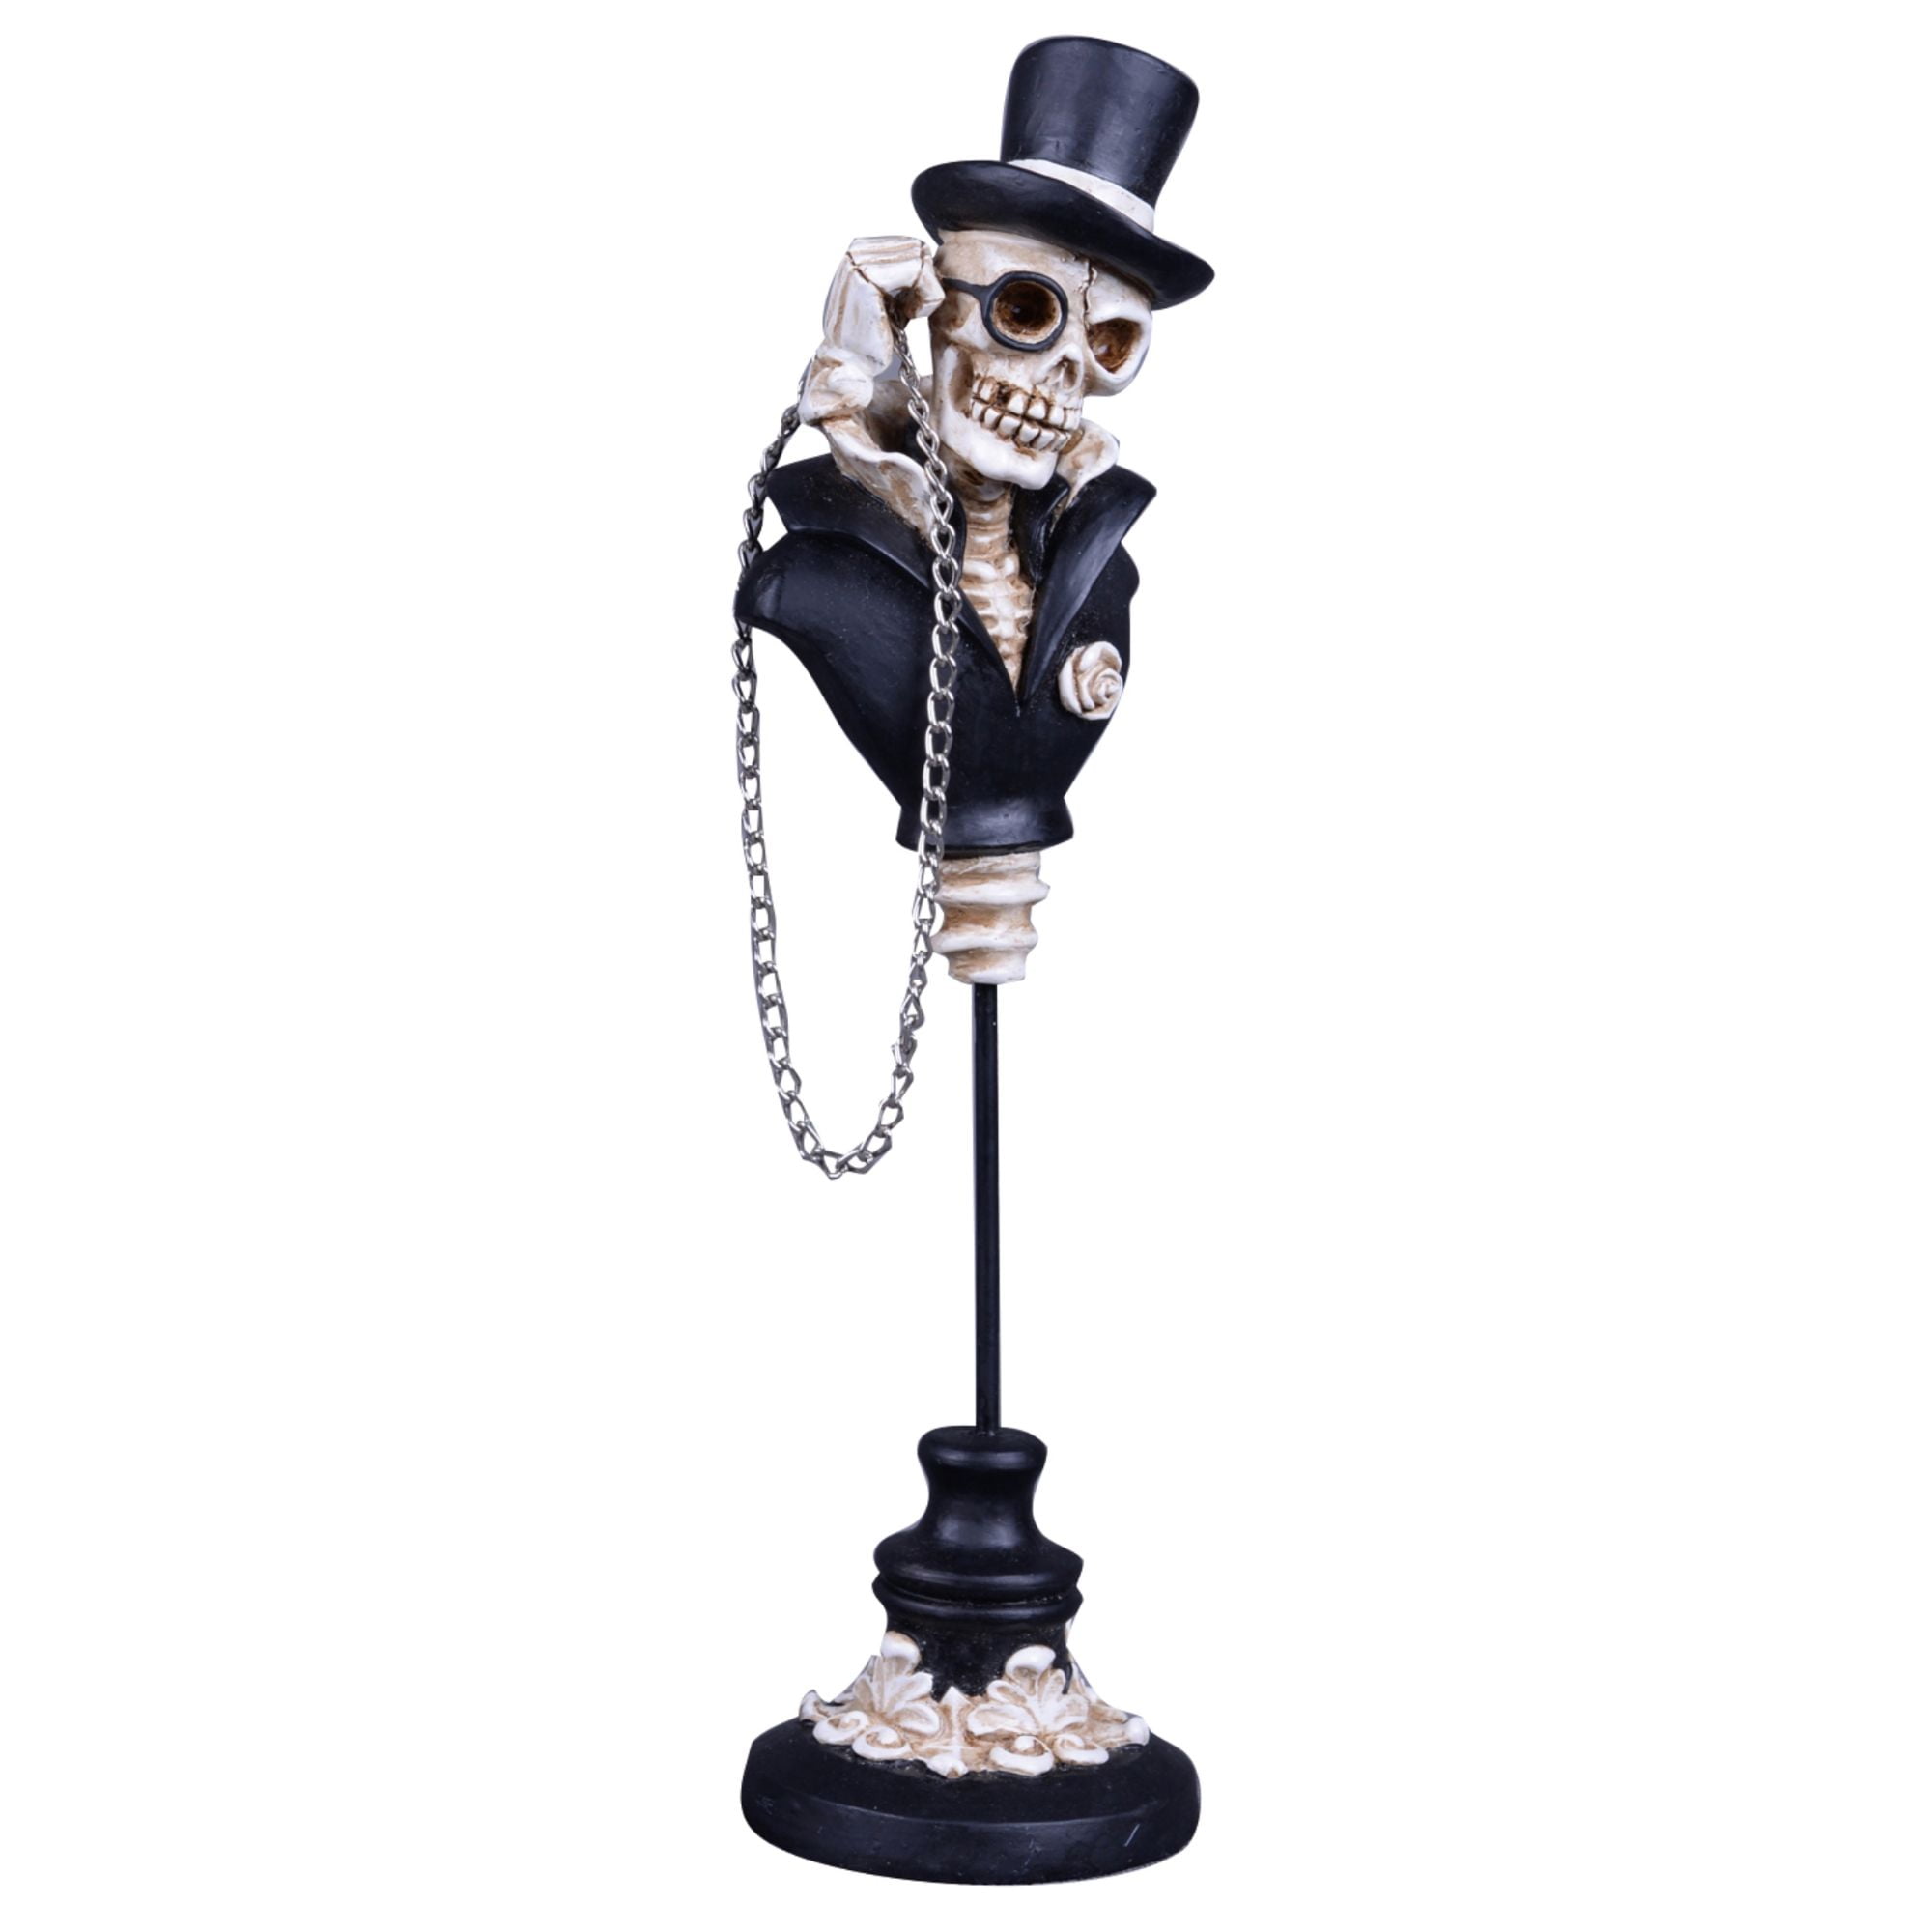 16" Flying Mr Bones Ghoulish Skeleton Poseable Figure 